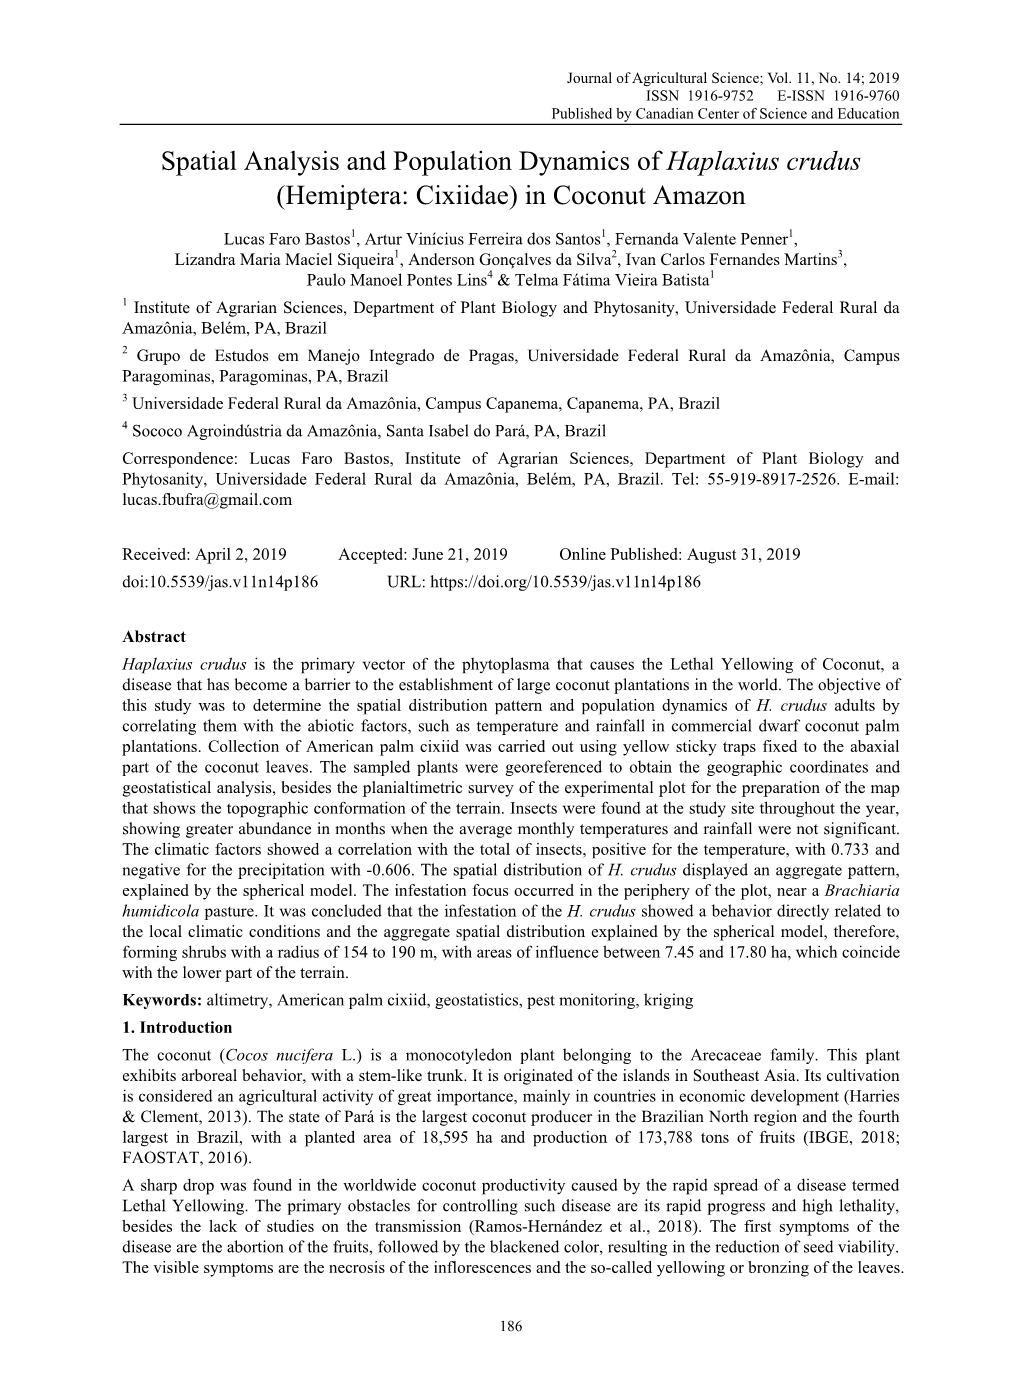 Spatial Analysis and Population Dynamics of Haplaxius Crudus (Hemiptera: Cixiidae) in Coconut Amazon